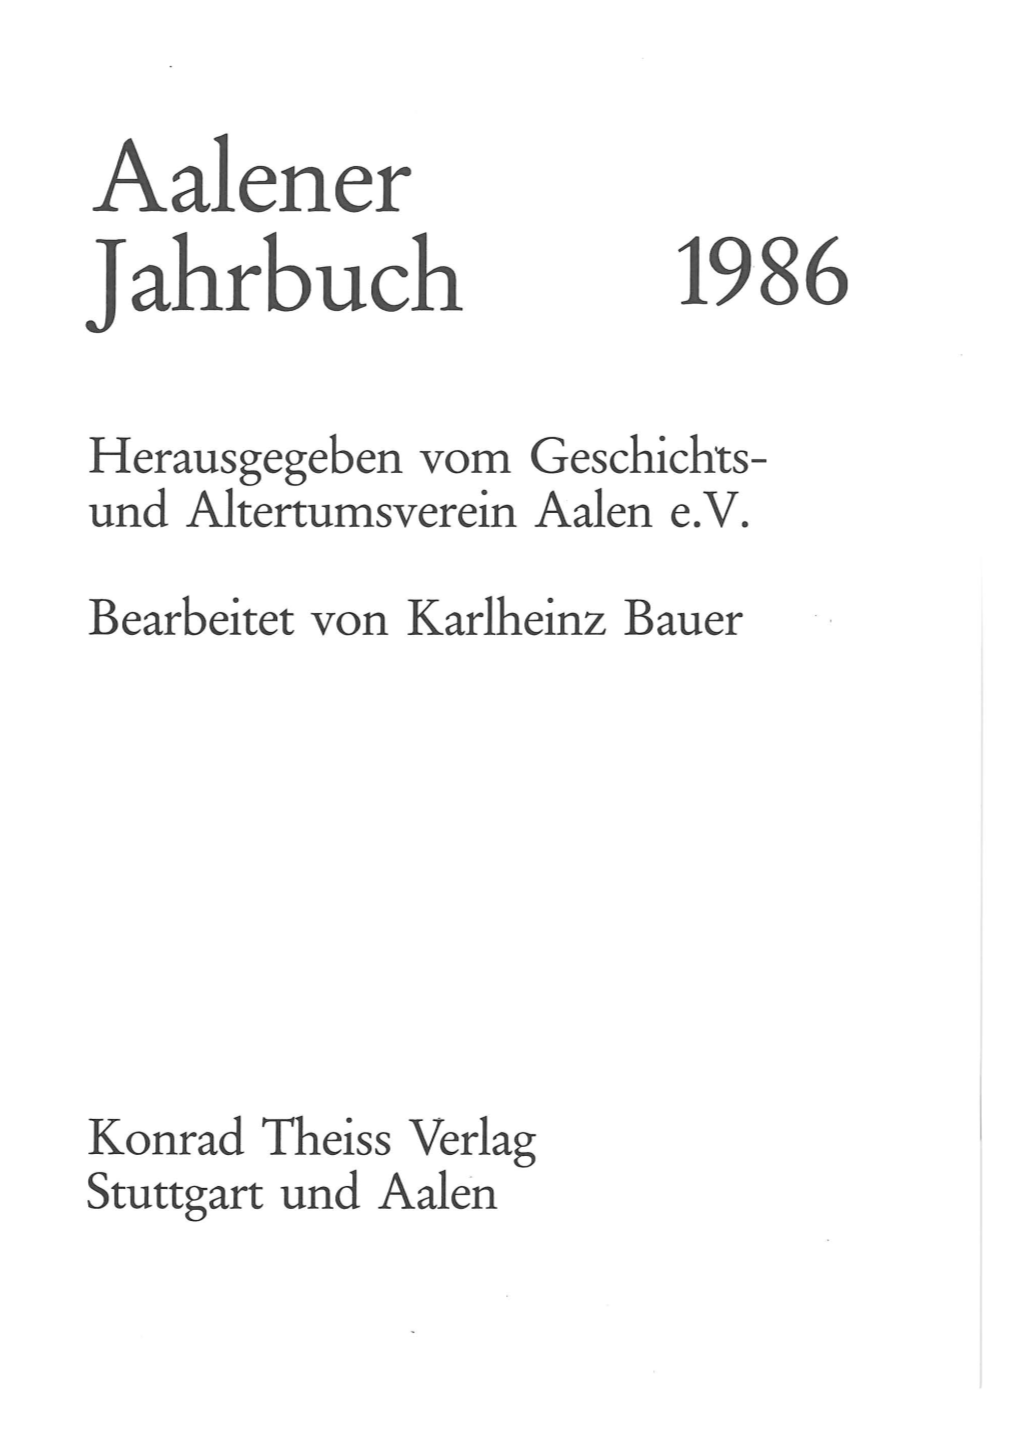 Aalener Jahrbuch 1986